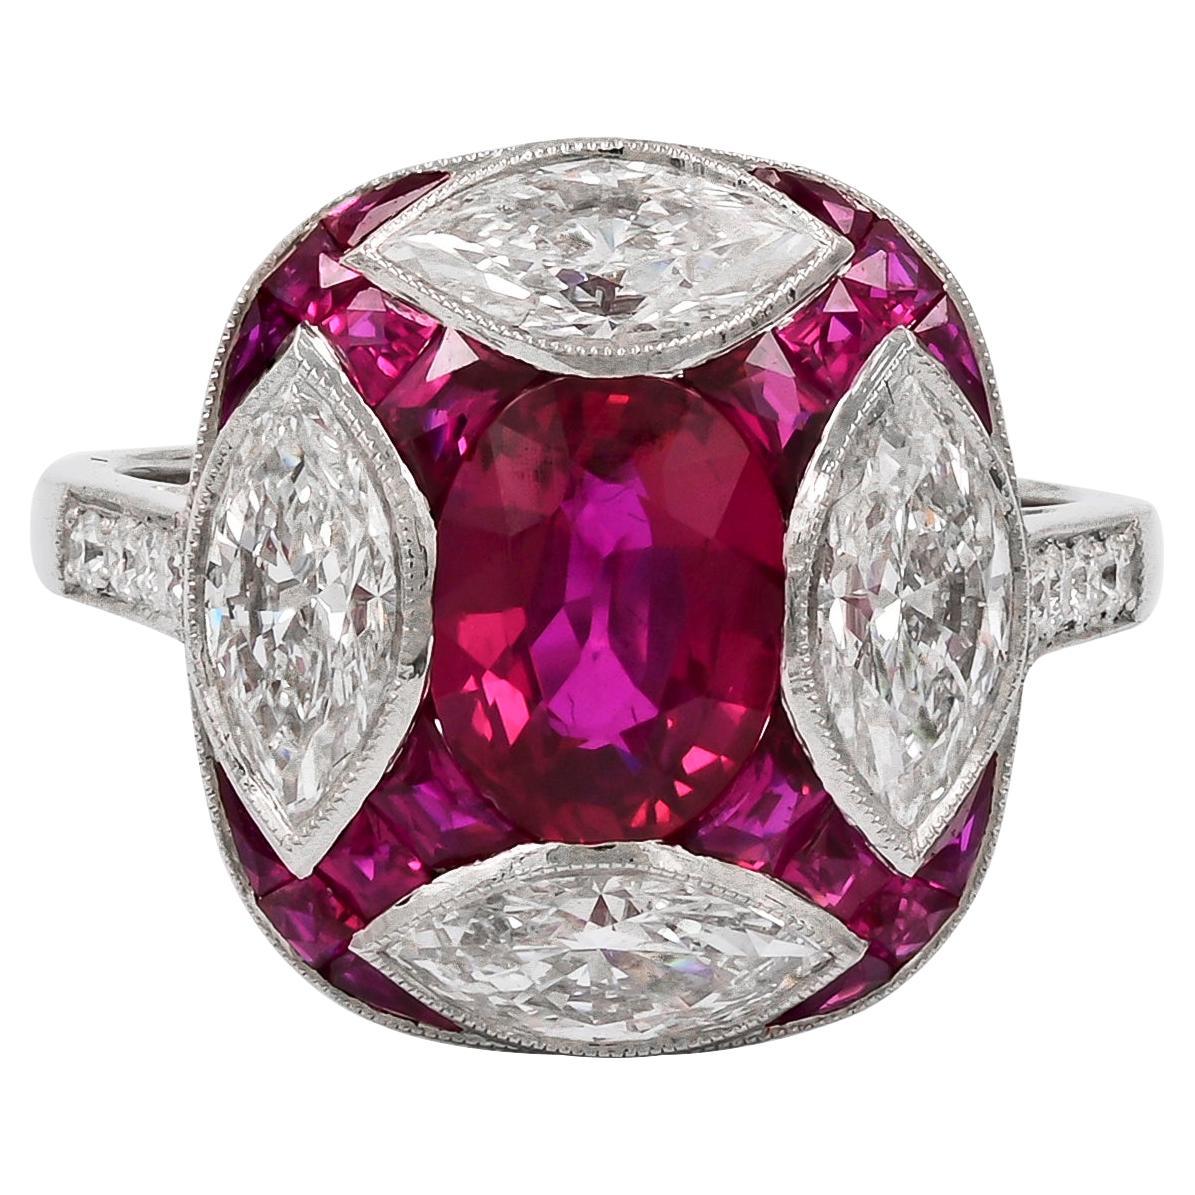 Sophia D, 1.51 Carat Ruby and Diamond Art Deco Style Ring in Platinum